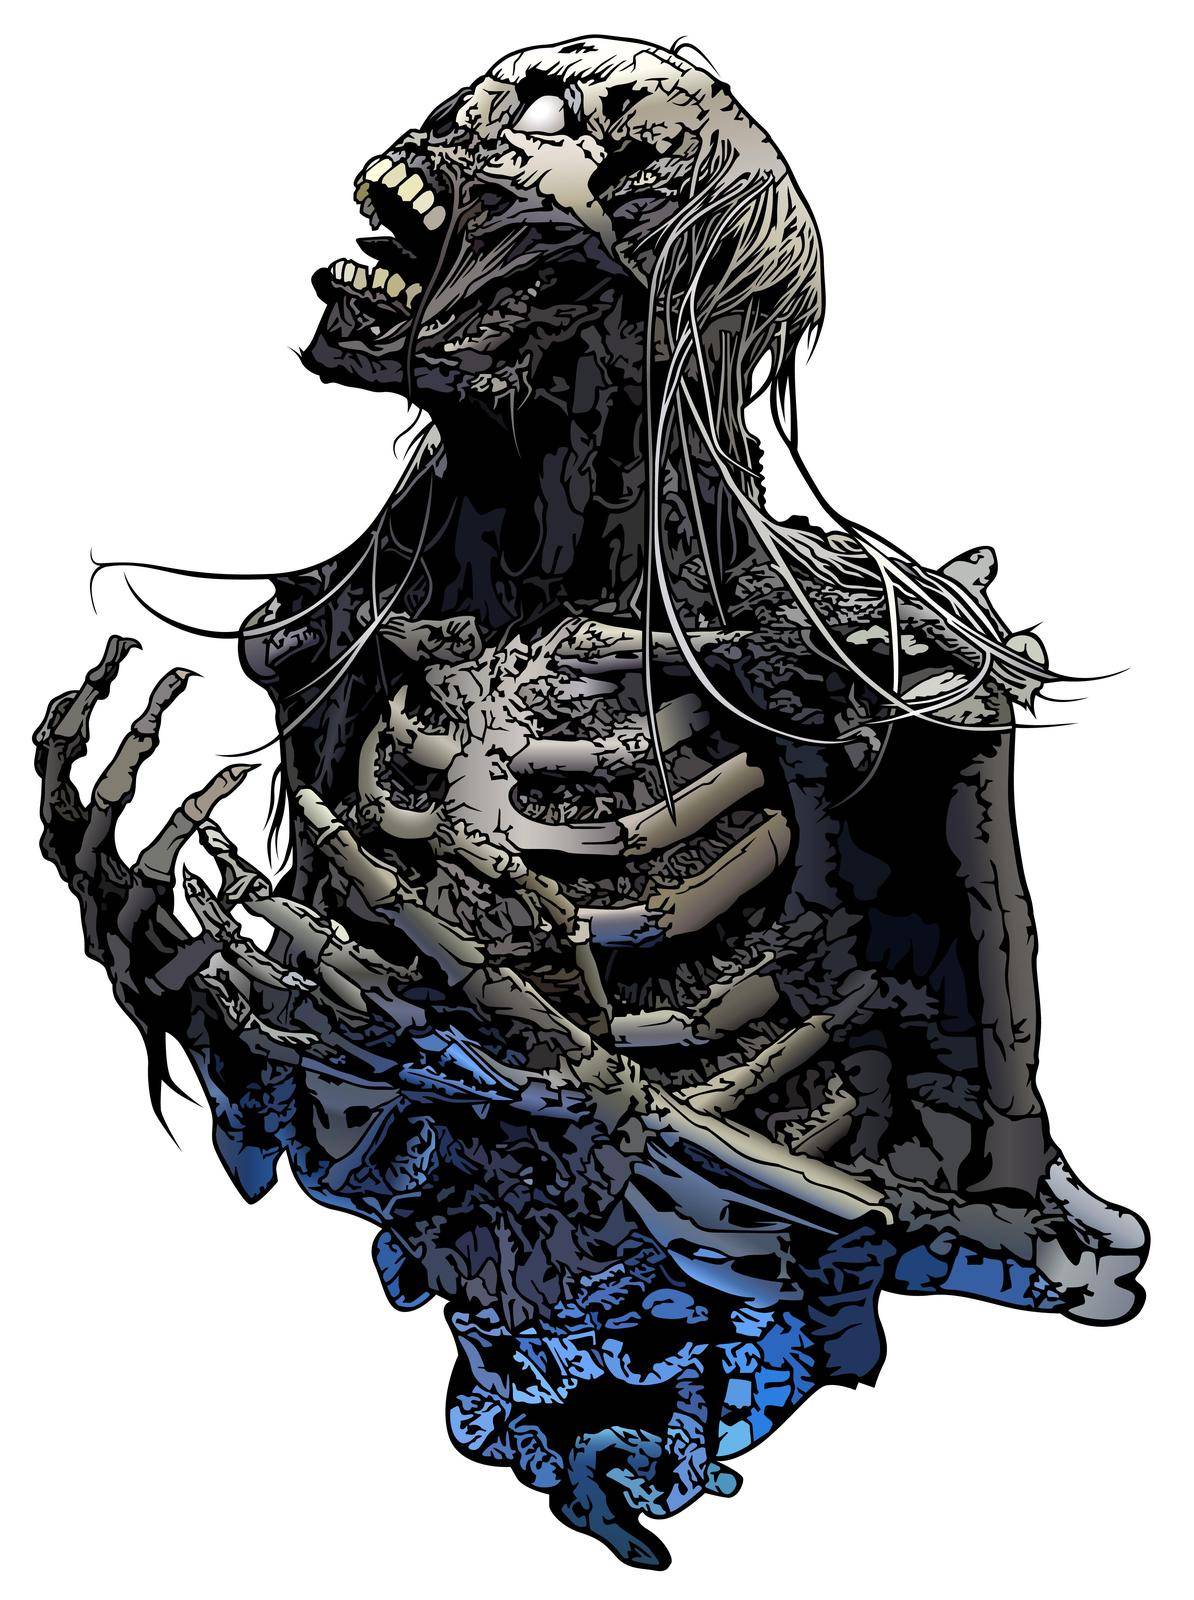 Horror Skeleton Illustration Isolated on White Background - Scary Design Element for Halloween or Metal Music Design, Vector